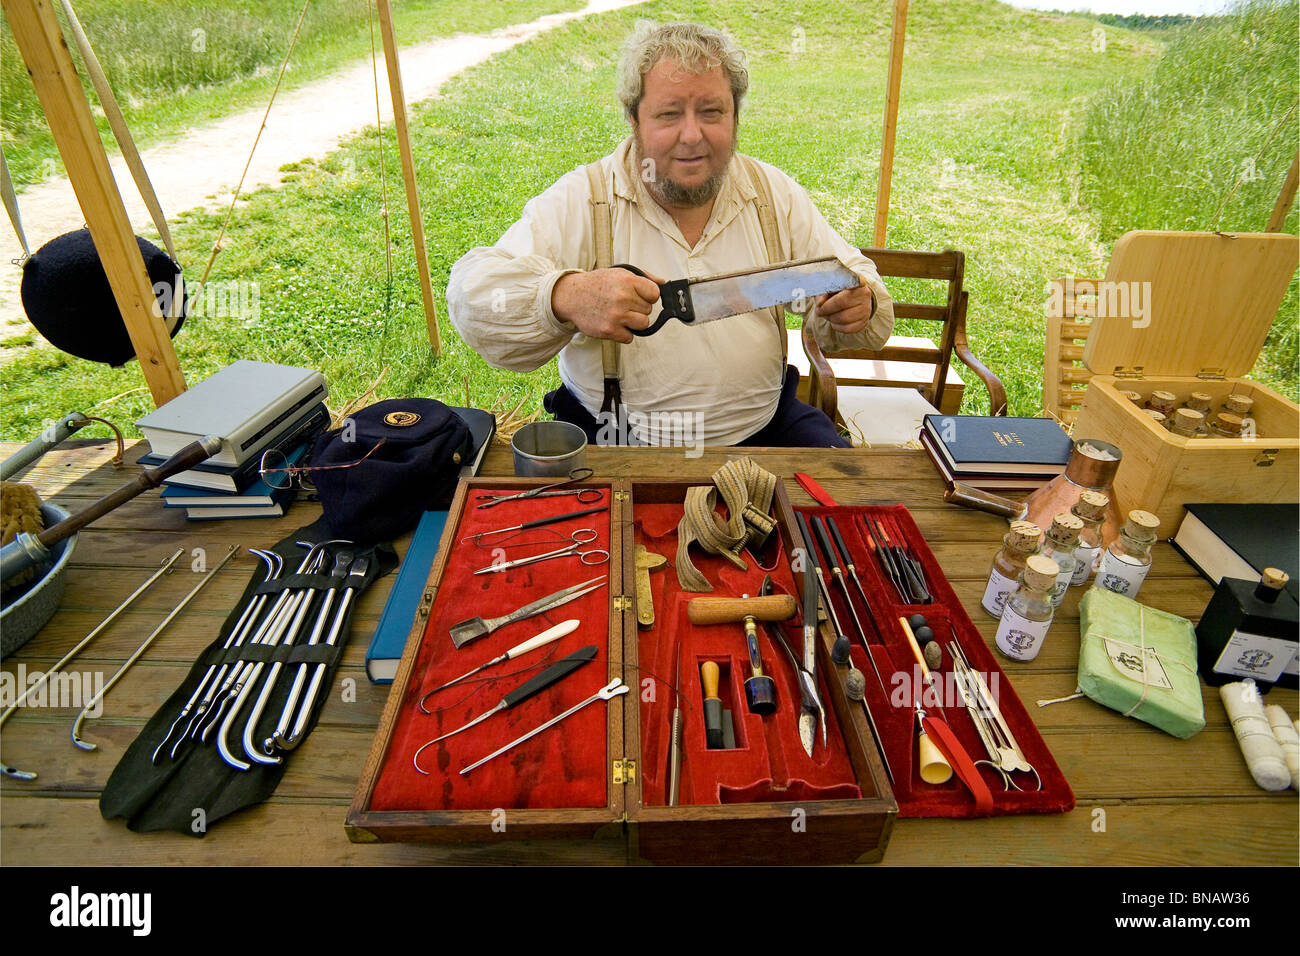 A reenactor displays Civil War medical instruments at a re-created military encampment at Yorktown Battlefield in historic Yorktown, Virginia, USA. Stock Photo